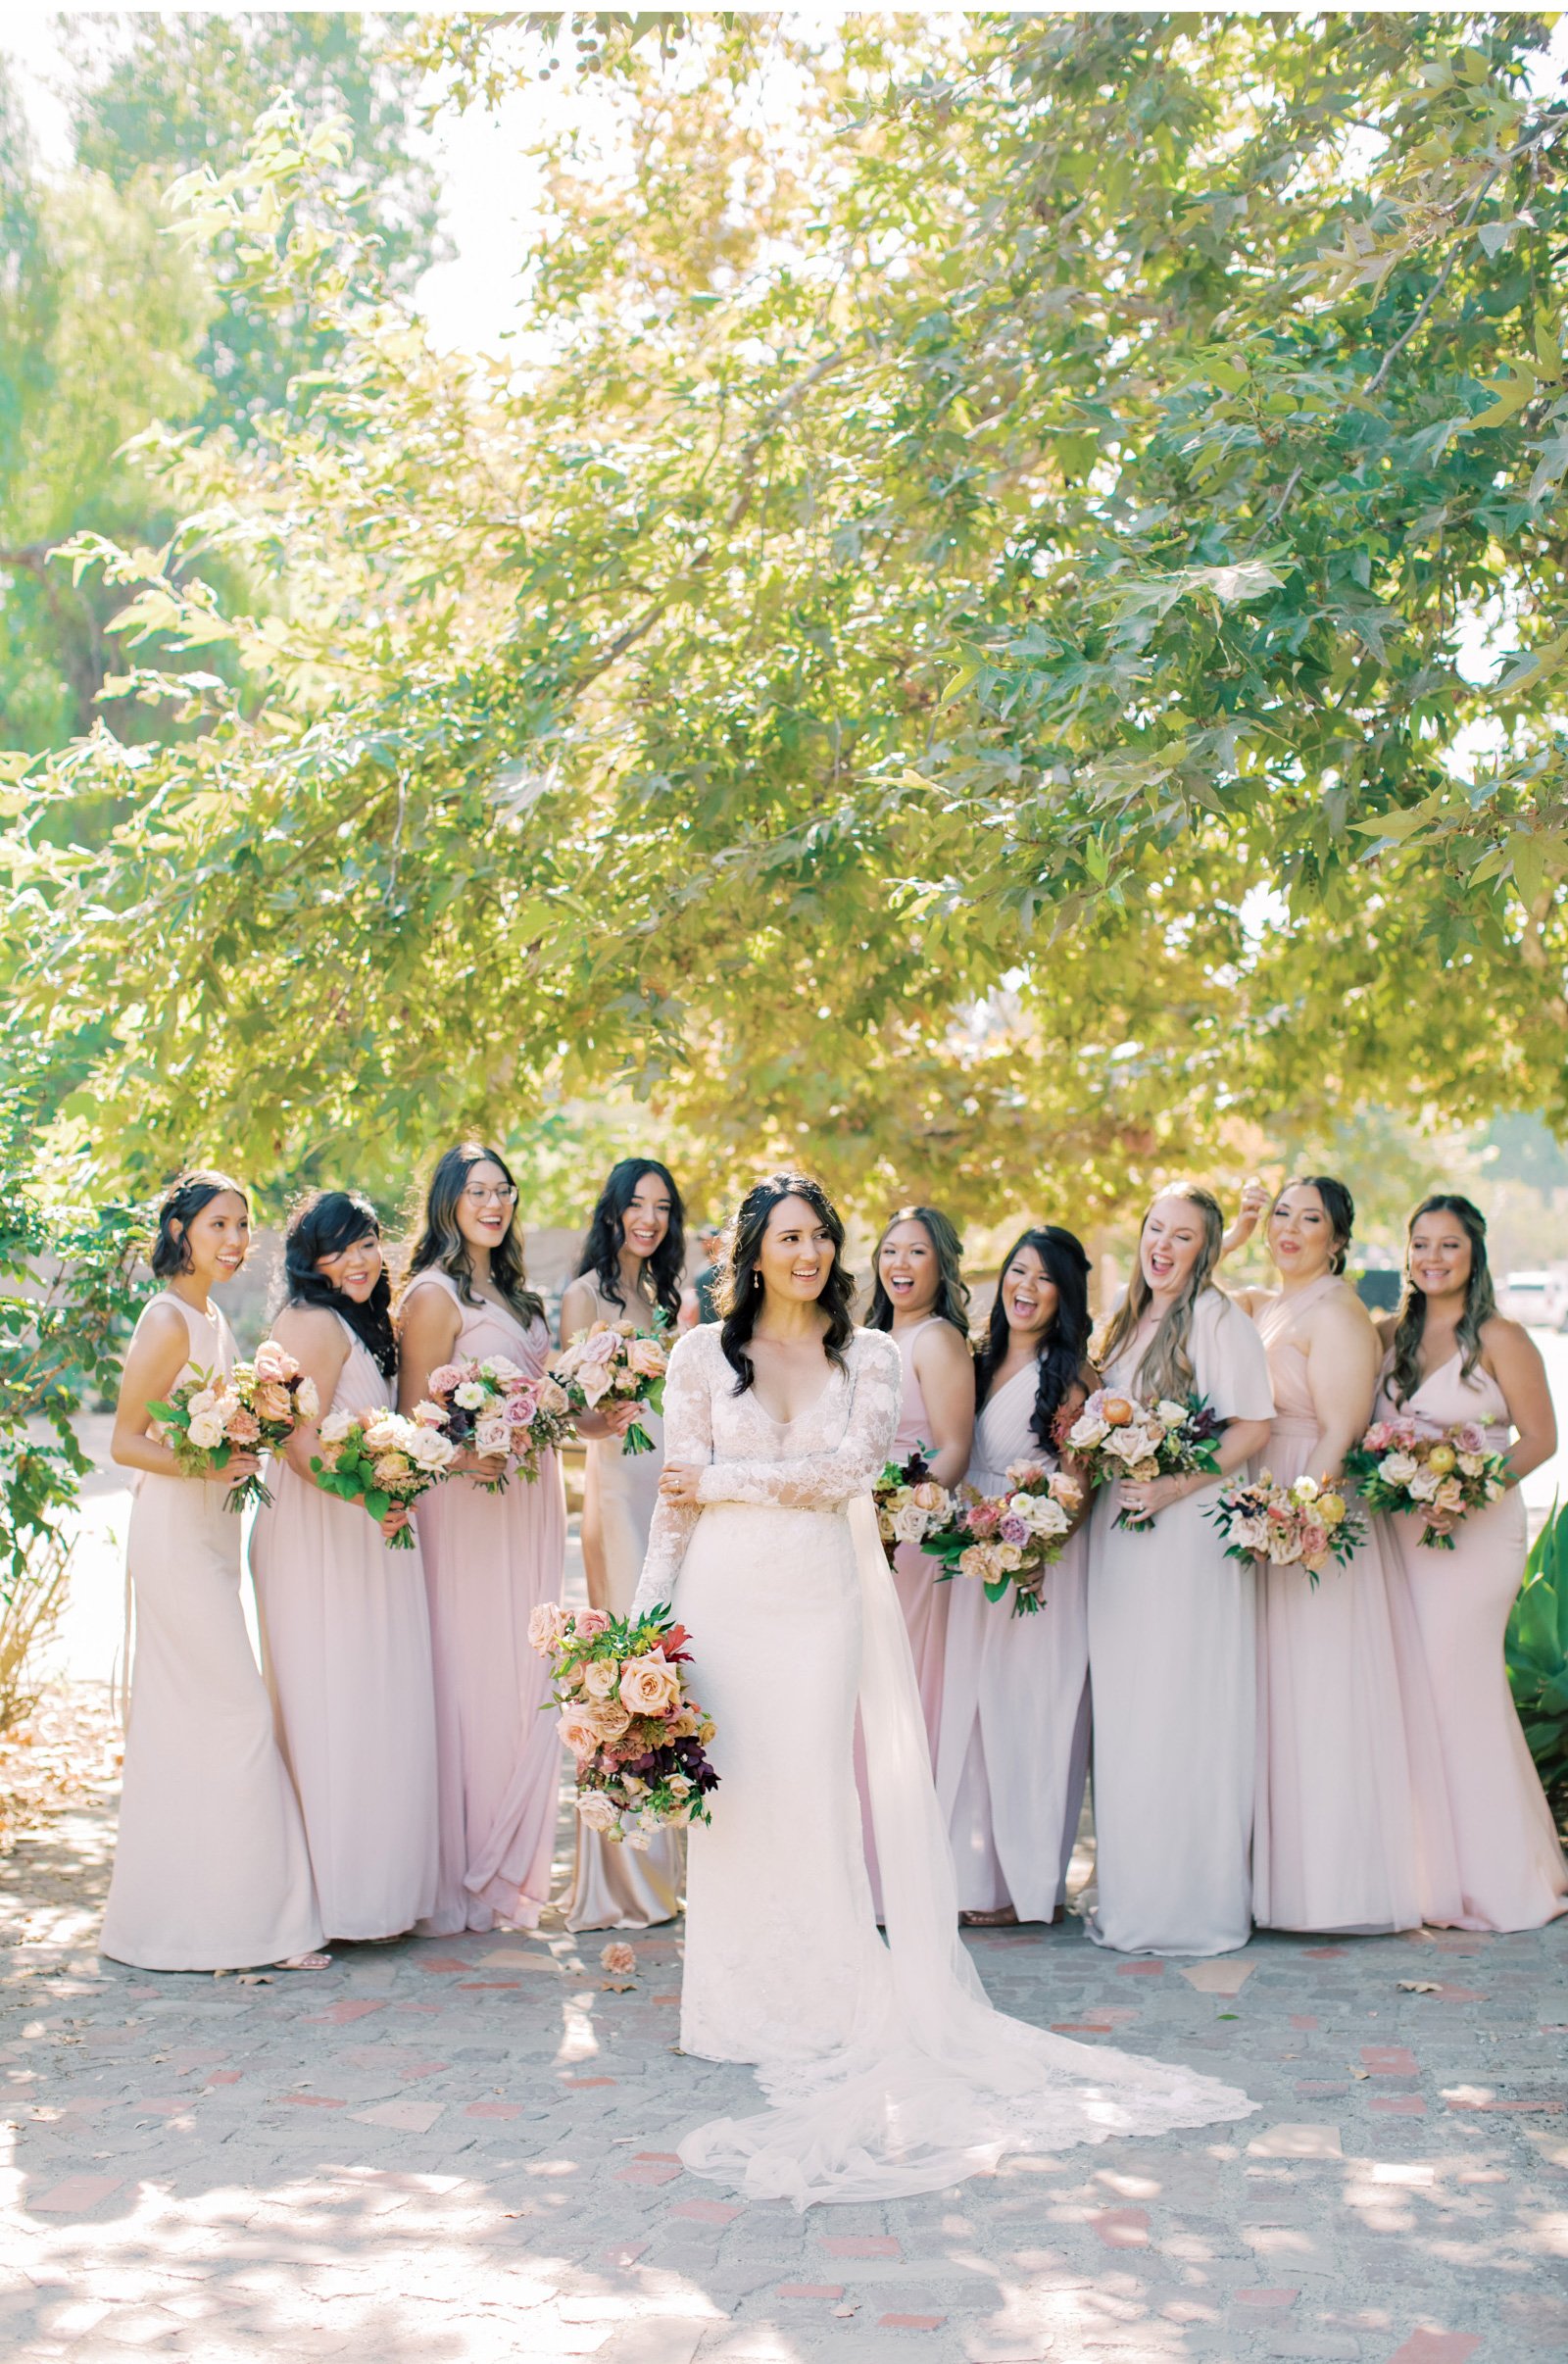 Southern-California-Weddings-Coastal-Wedding-Inspiration-Top-Wedding-Photographers-Men's-Bridal-Suits-Wedding-Fashion-Bright-and-Airy-Photography-Natalie-Schutt-Photography-1_05.jpg